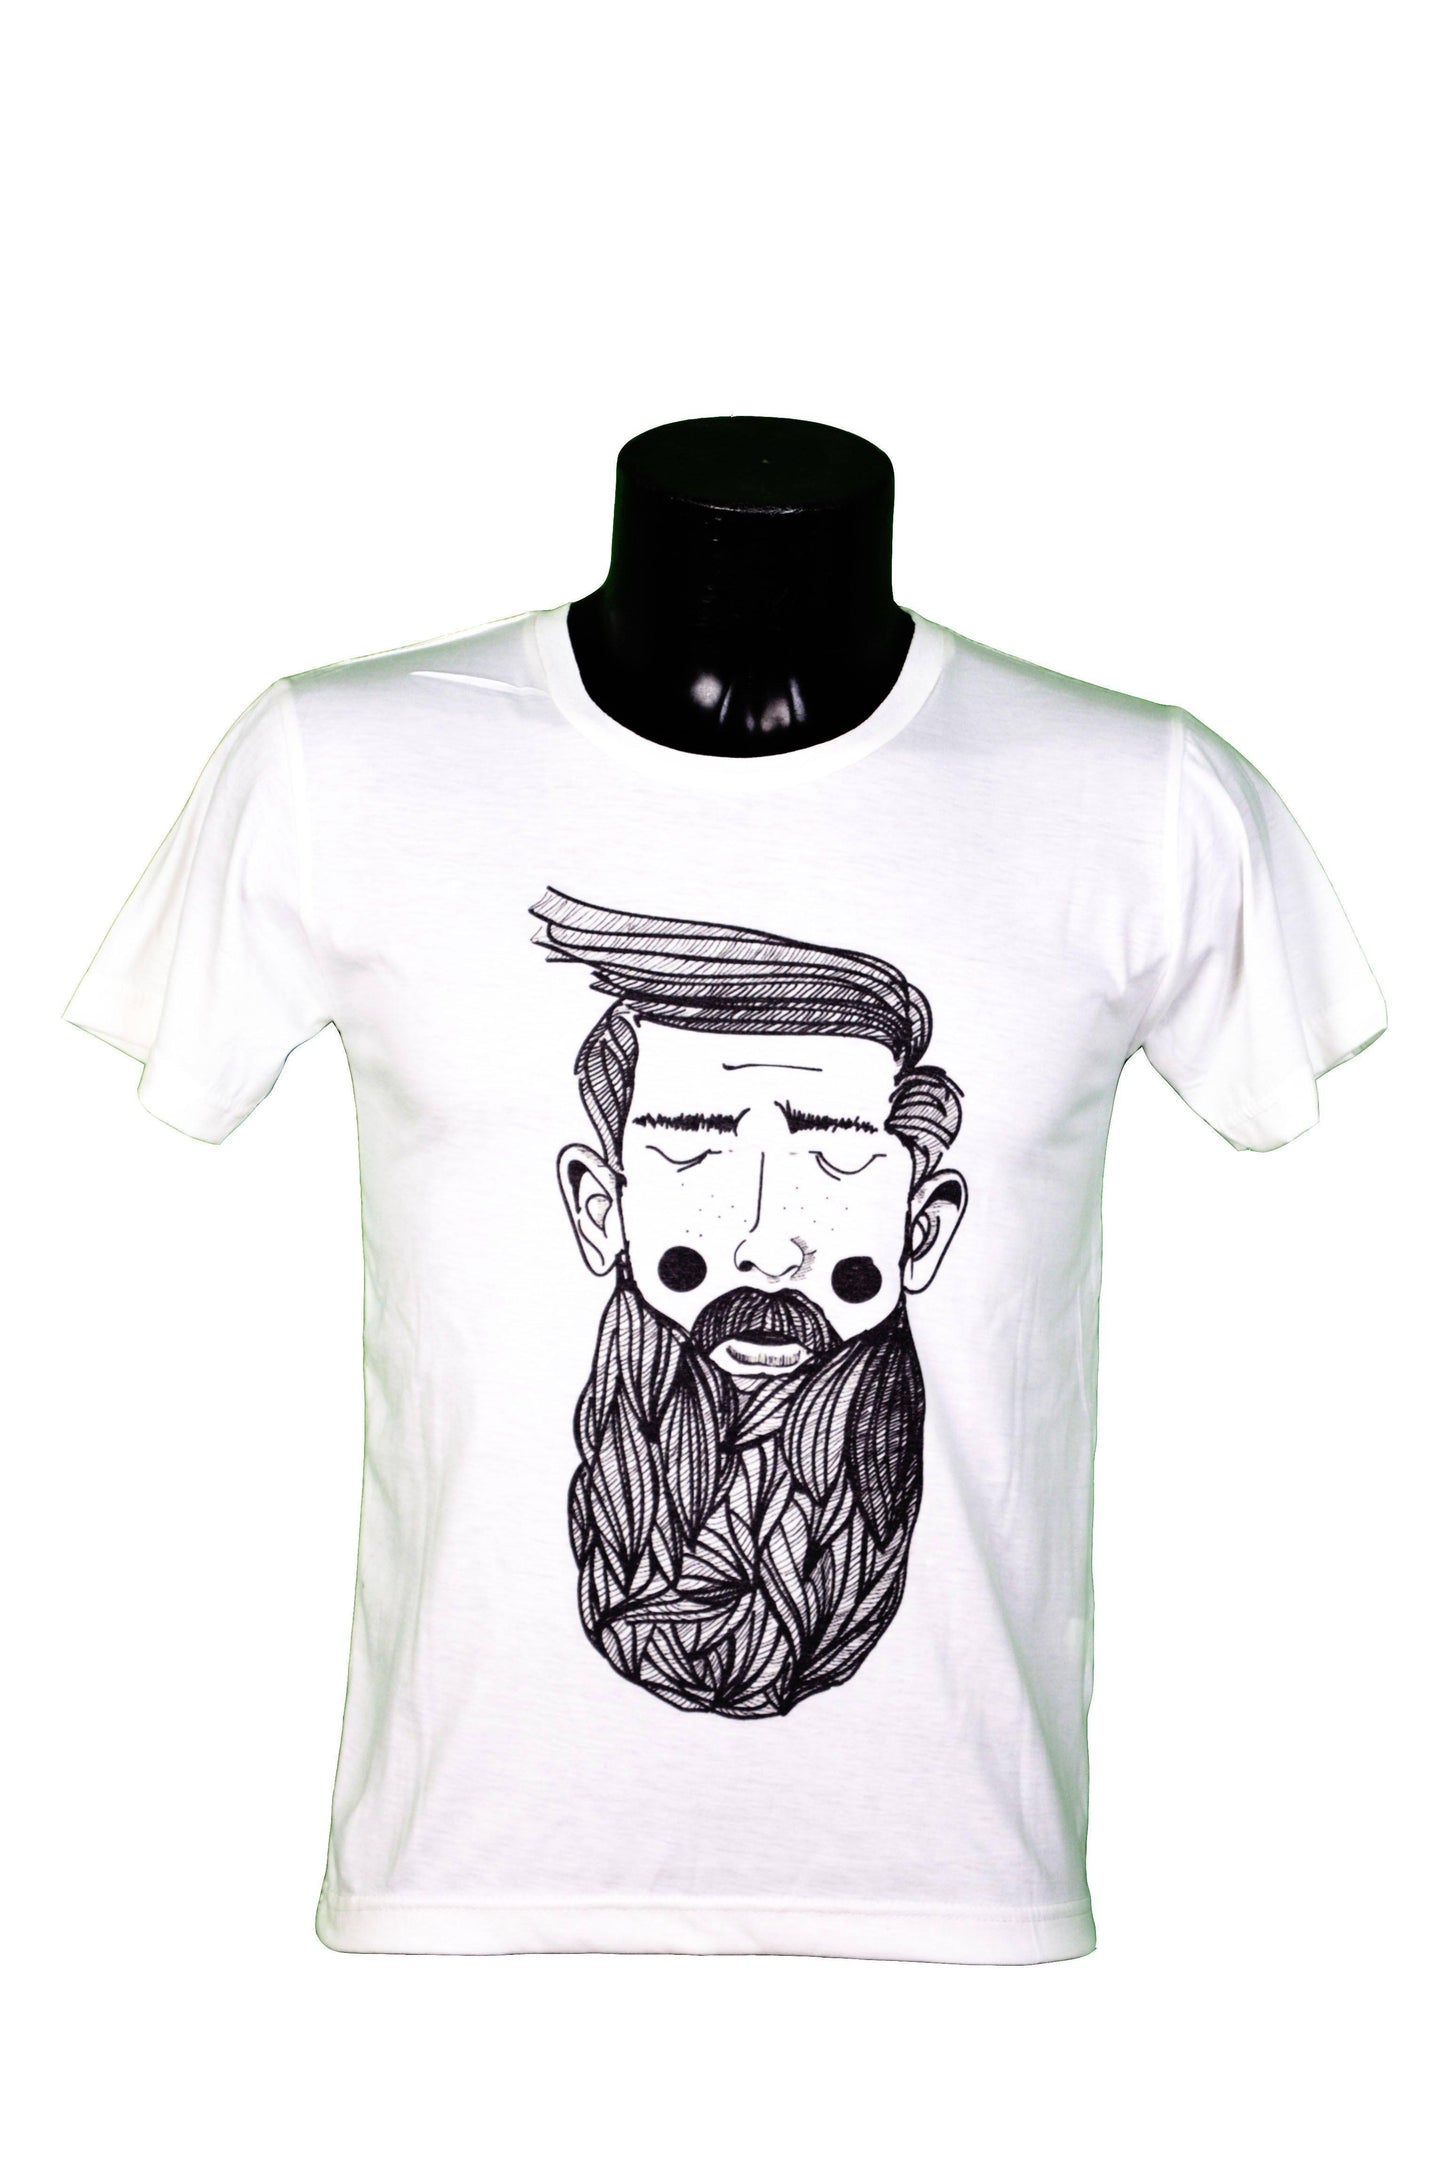 T-shirt illustration visage barbu blanc